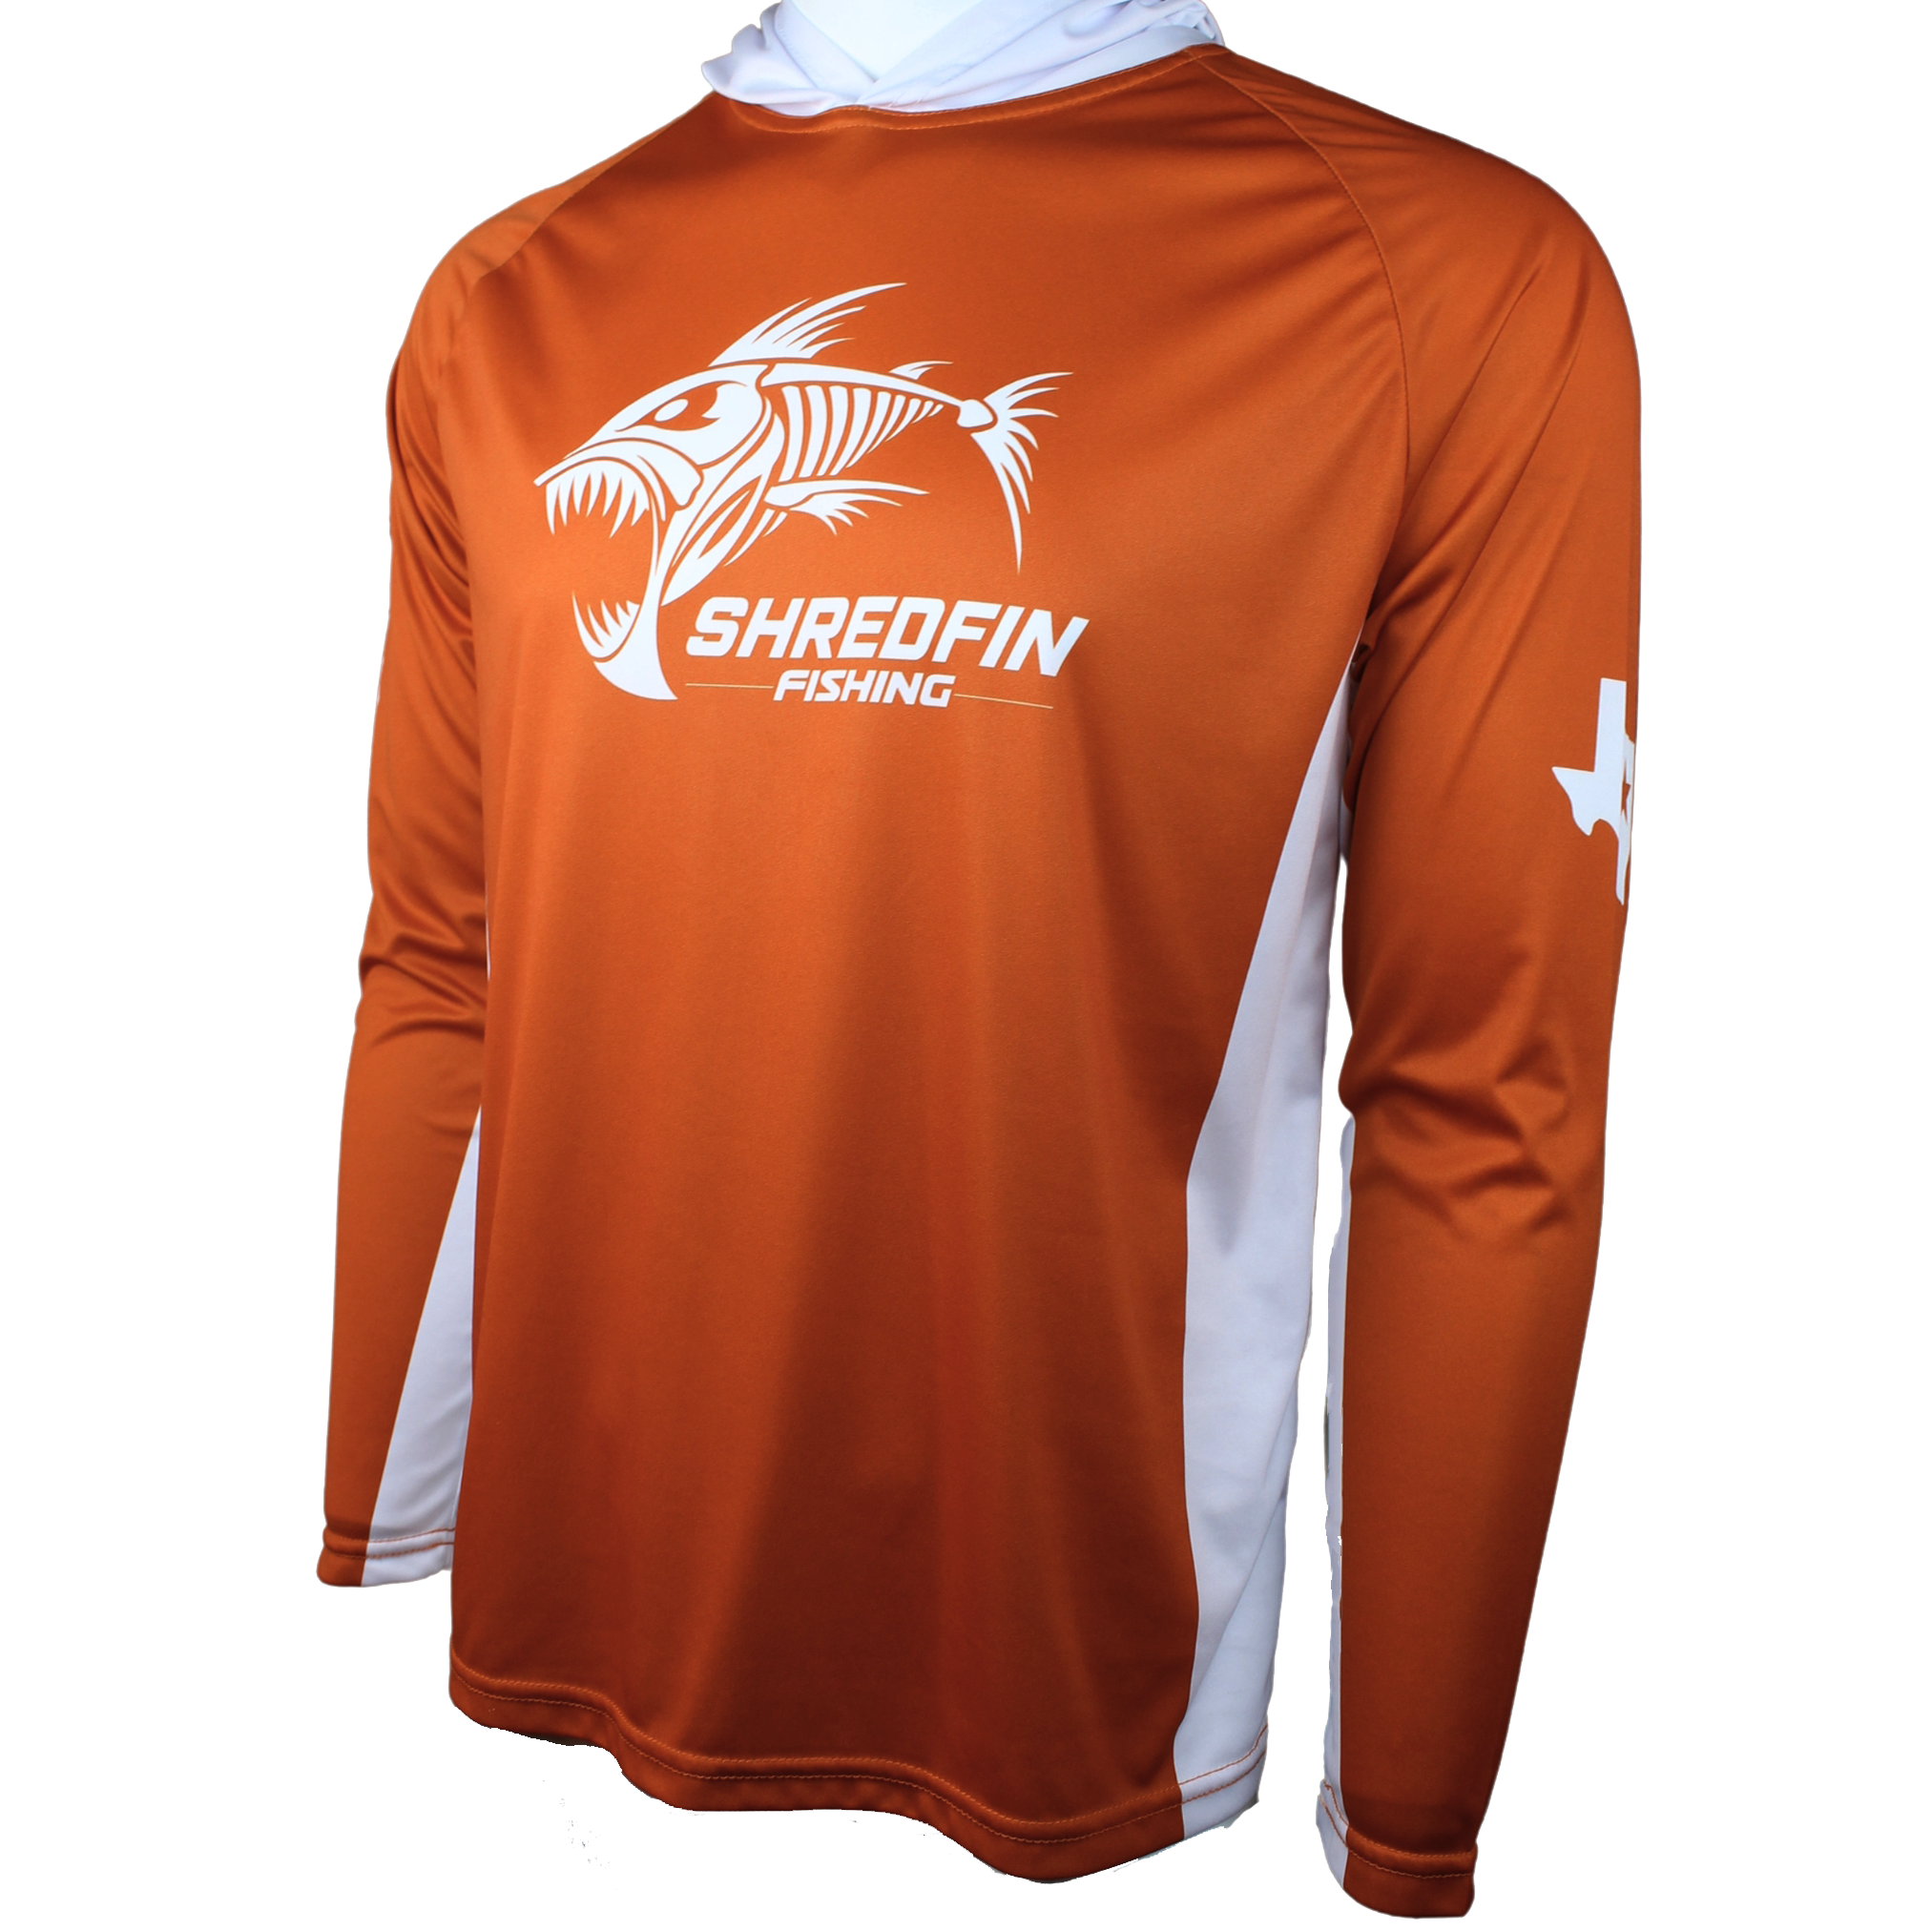 ShredFin Prym1 Camo (Typhoon) Hooded Performance Shirt 4XL